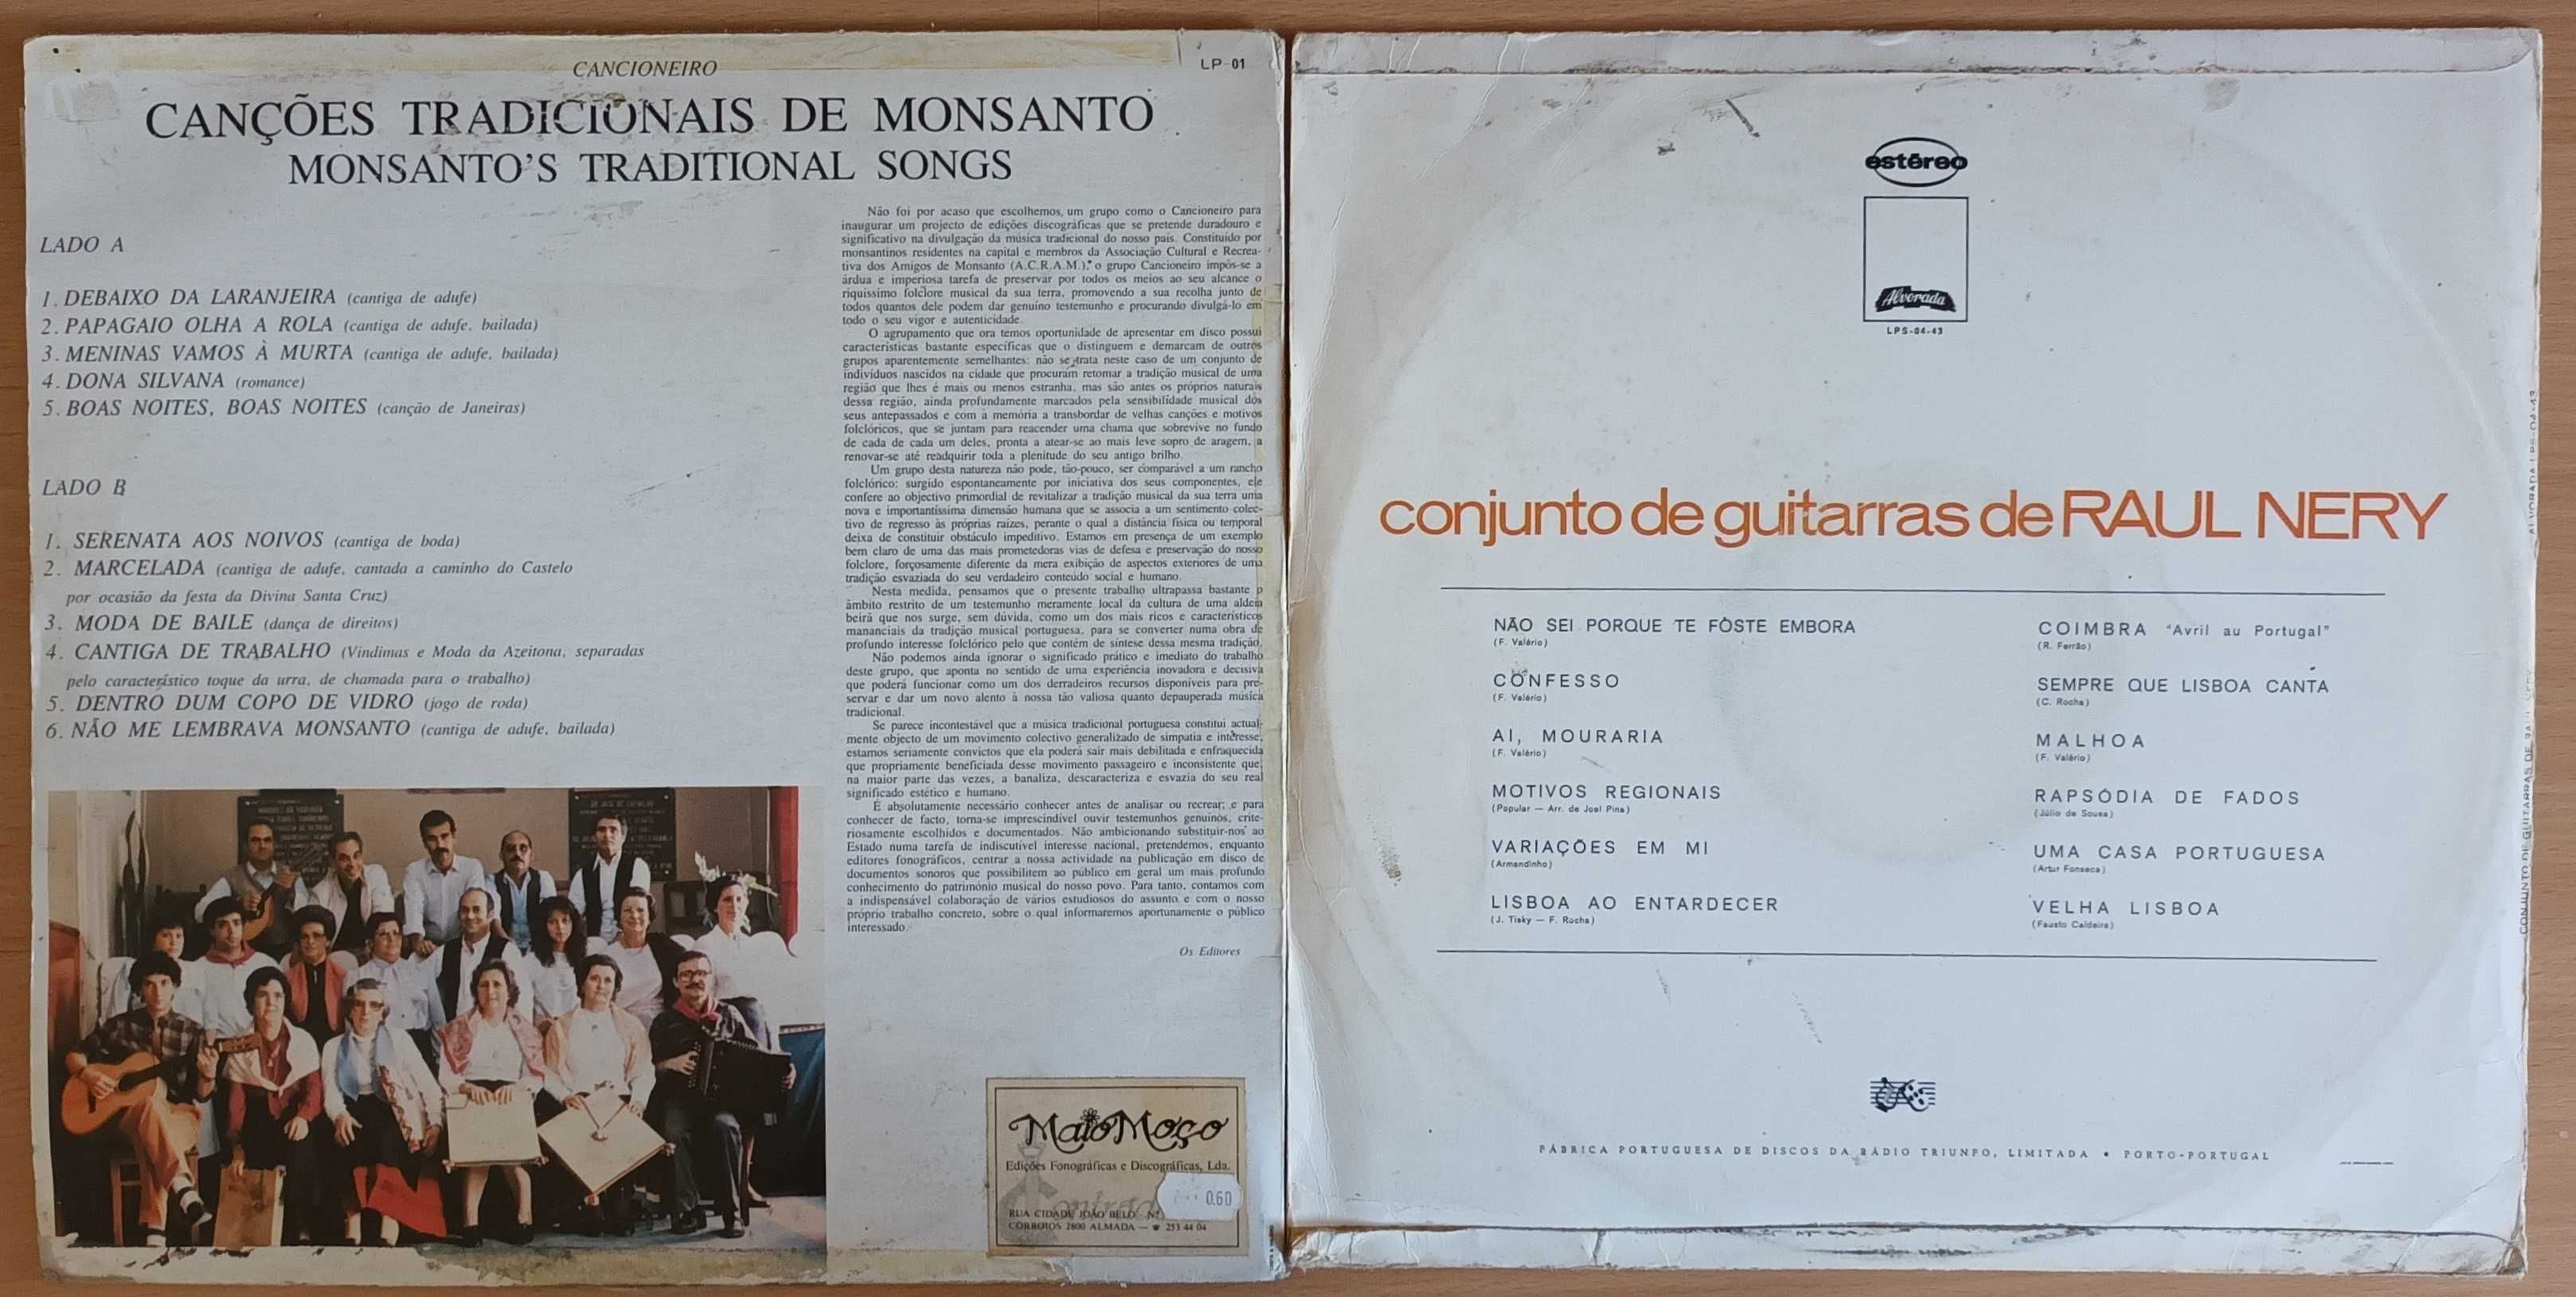 Guitarras de Raul Nery LP  + Cancioneiro de Monsanto LP